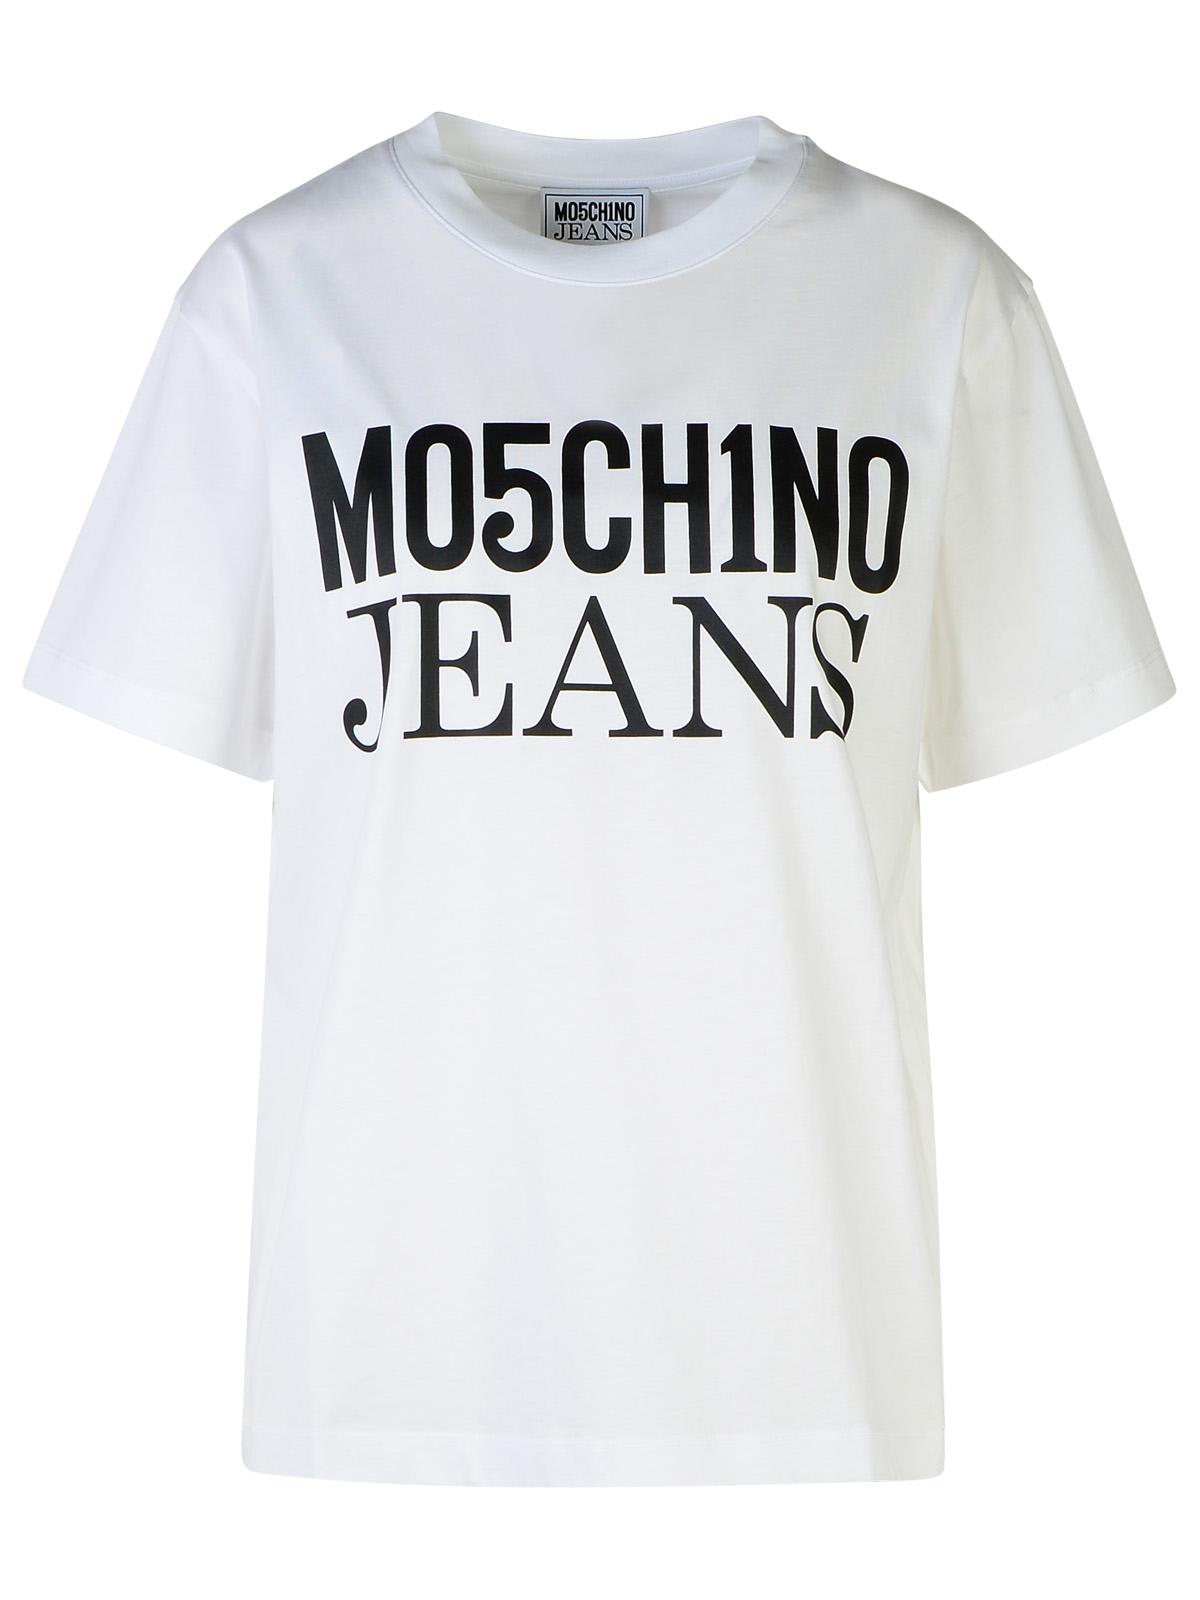 M05ch1n0 Jeans White Cotton T-shirt